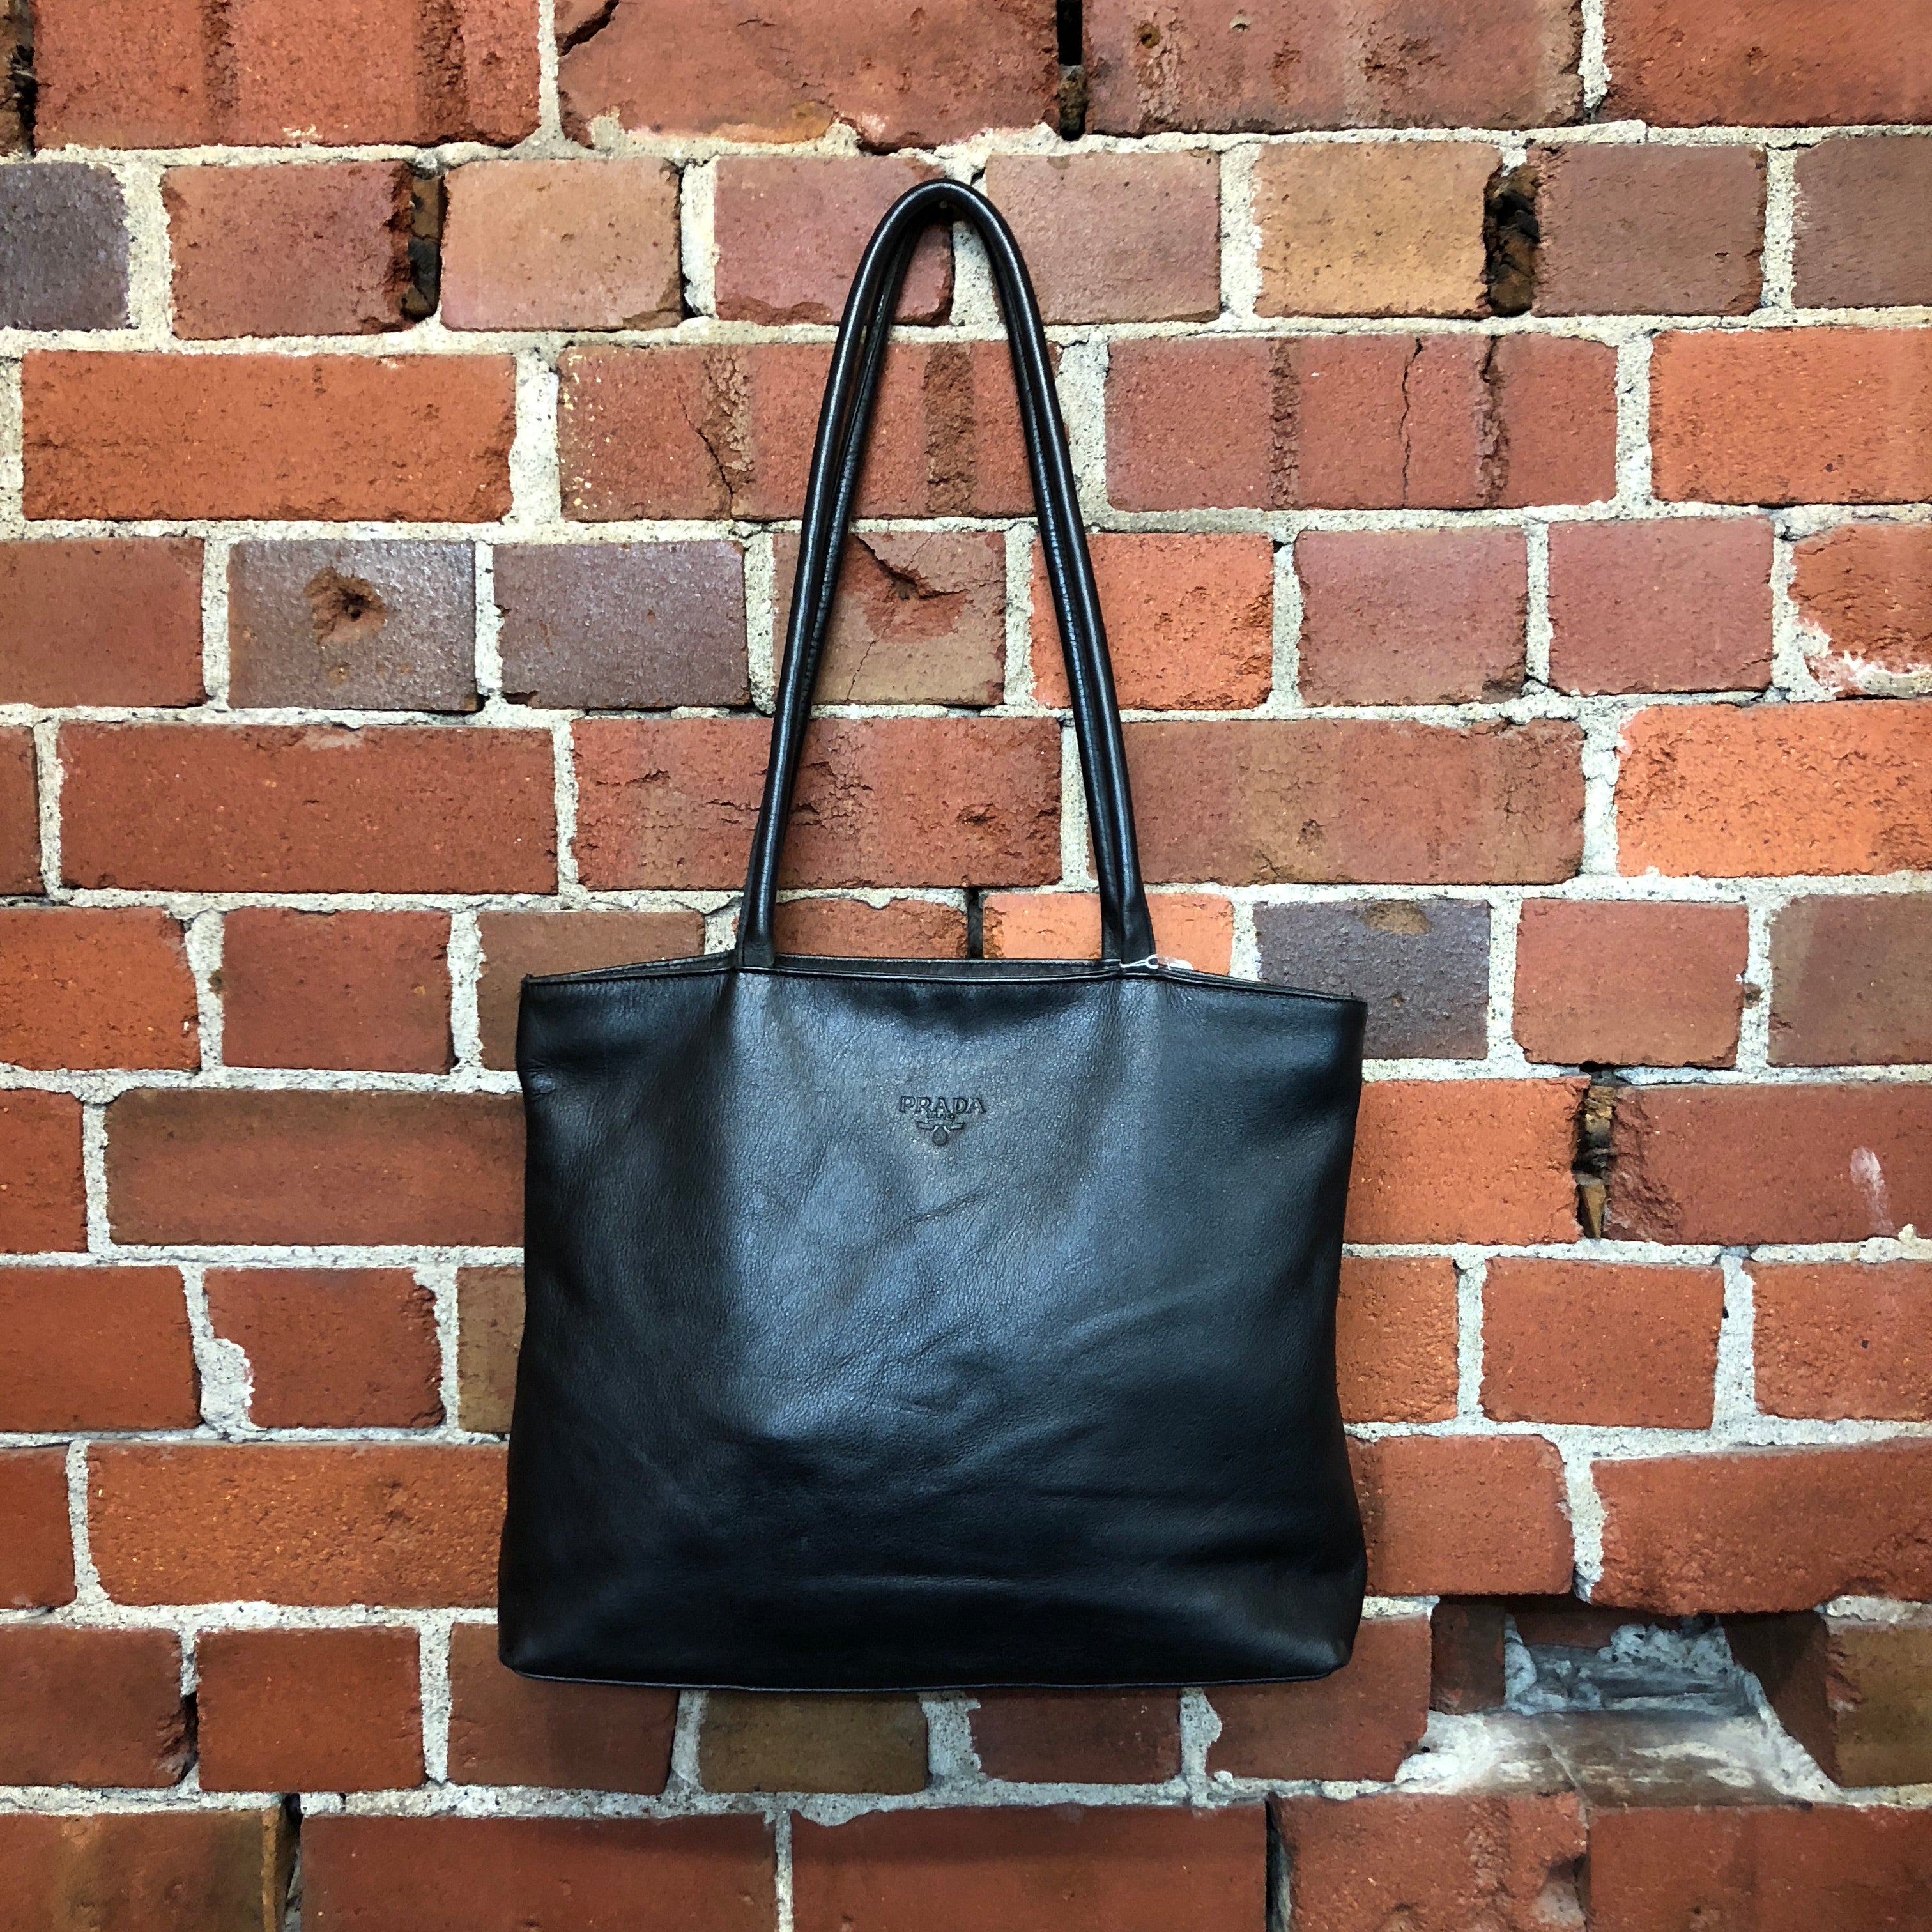 PRADA leather tote handbag